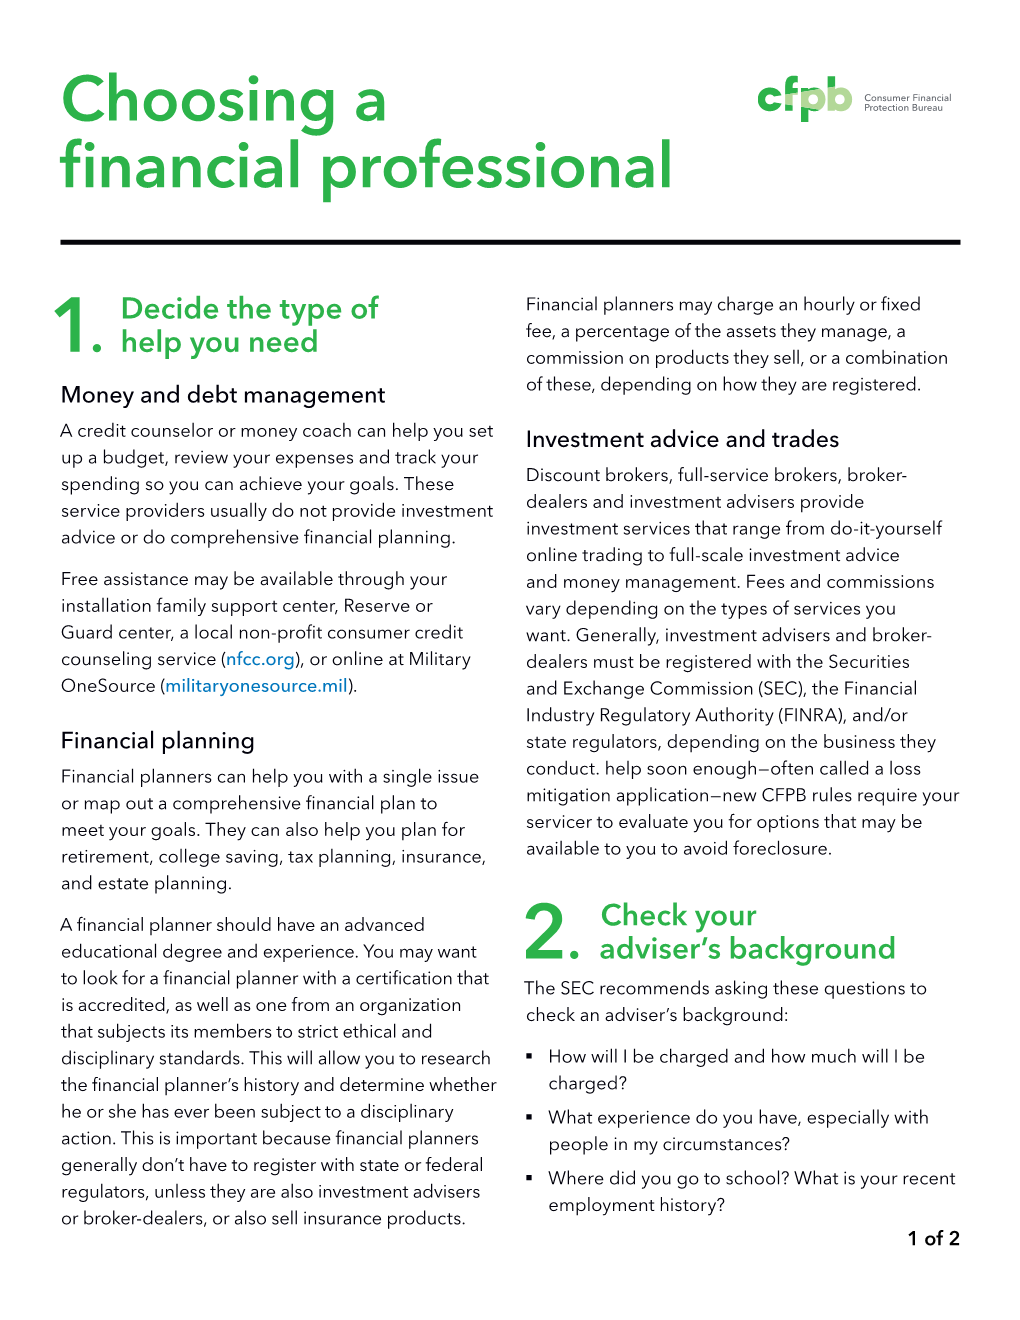 Choosing a Financial Professional